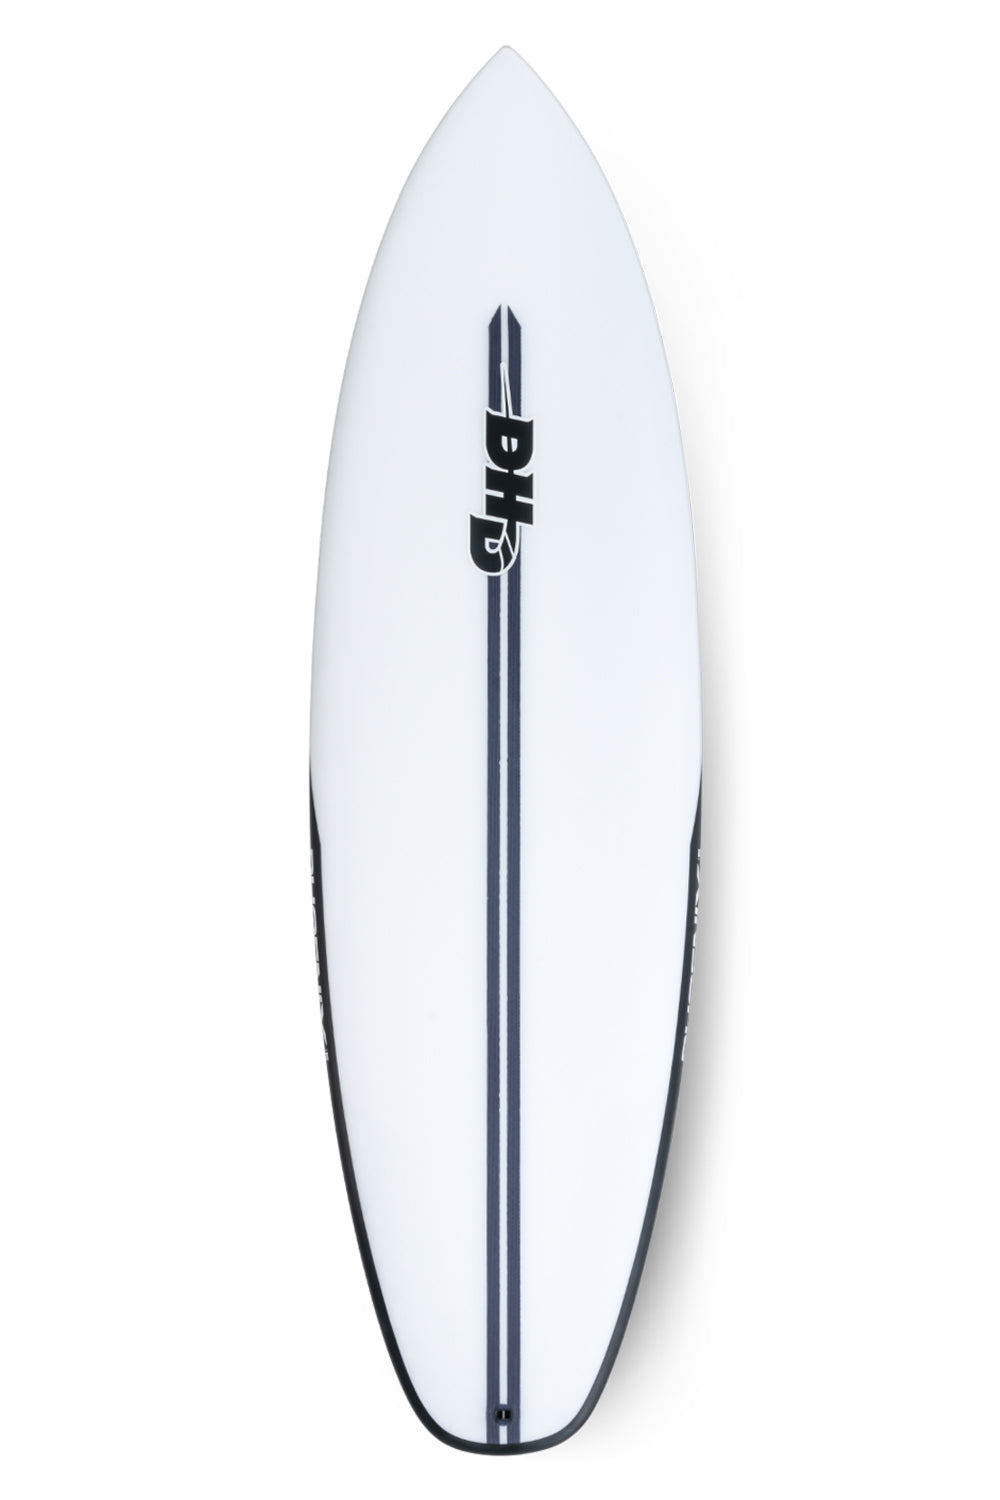 DHD Phoenix EPS Surfboard - Squash Tail